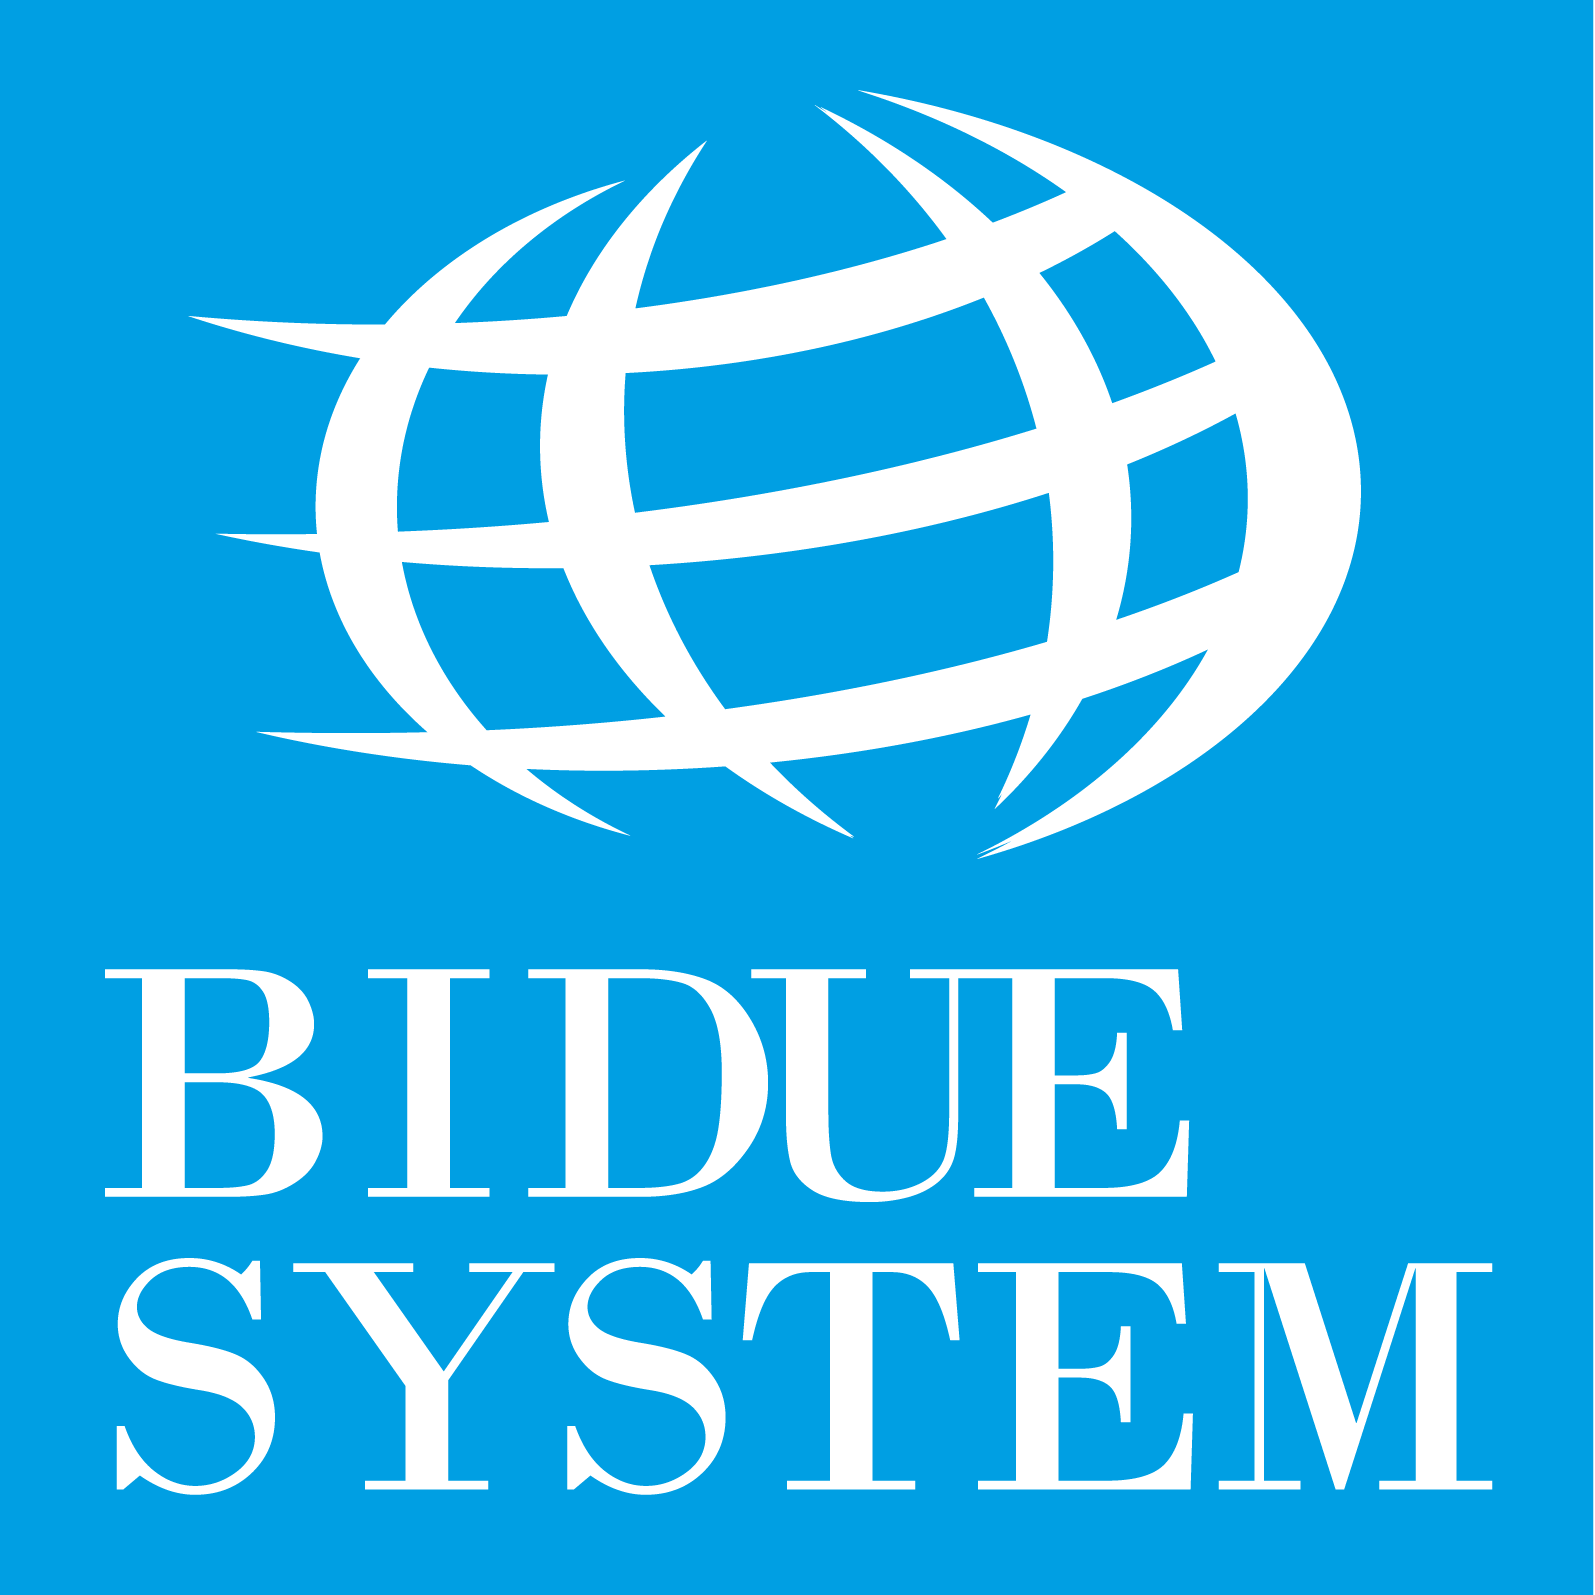 Bidue System